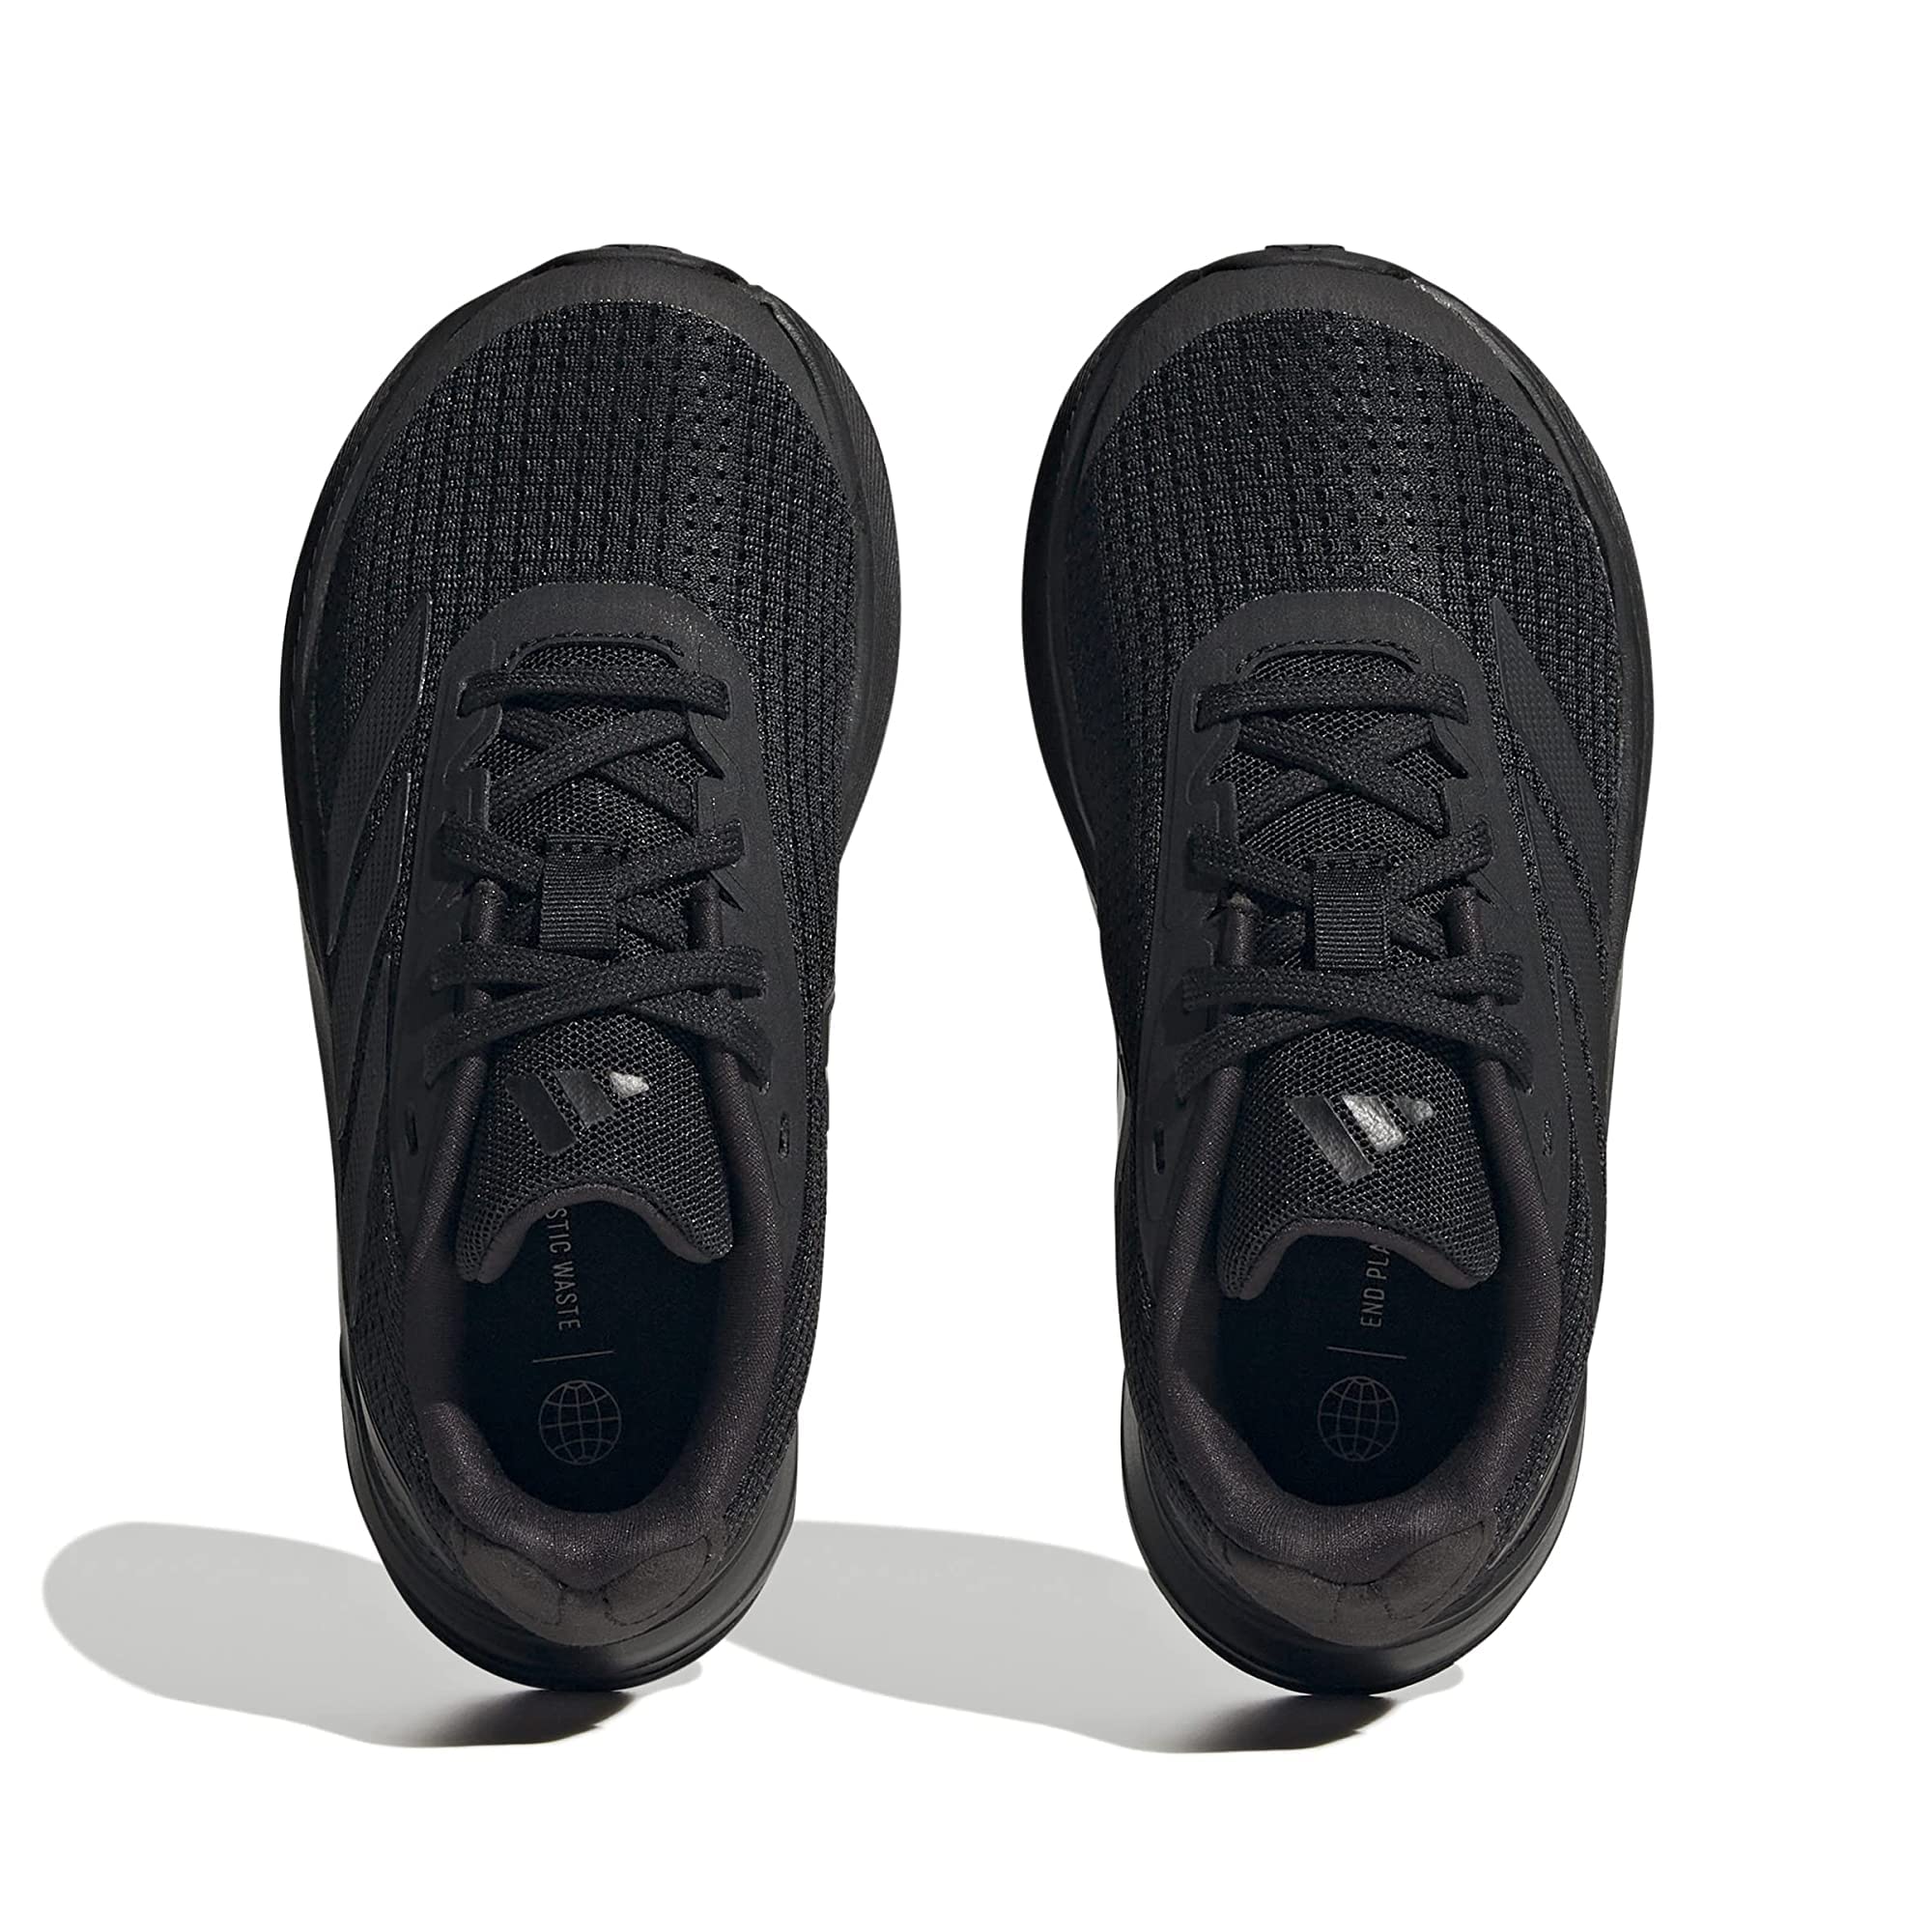 adidas Unisex-Child Duramo Sl Running Shoe